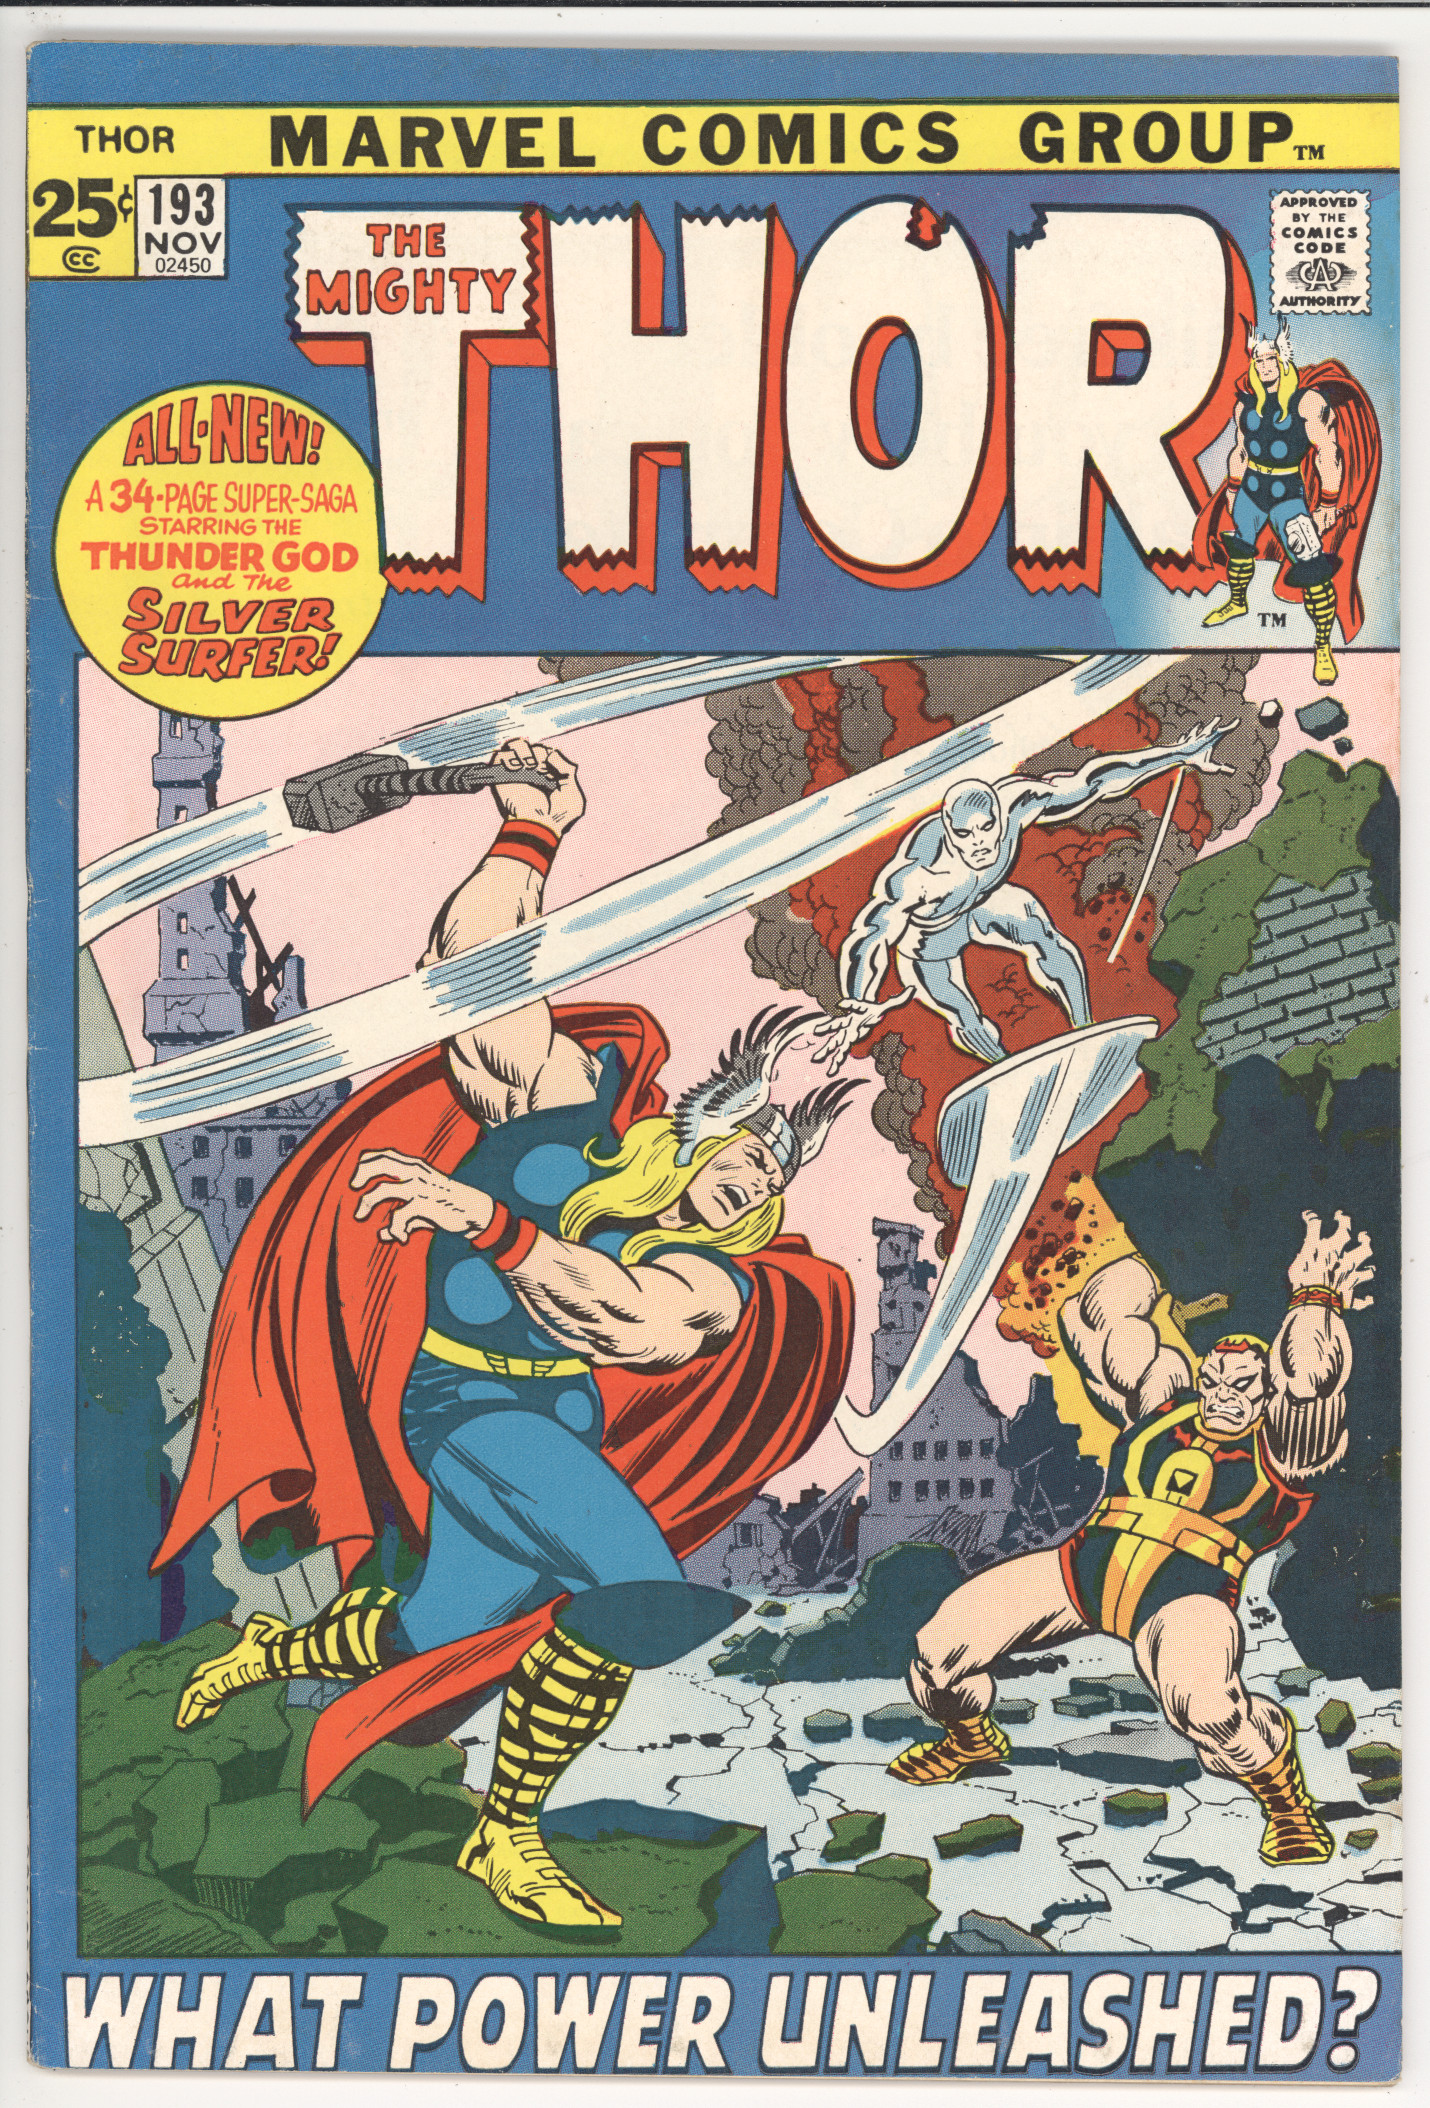 Thor #193